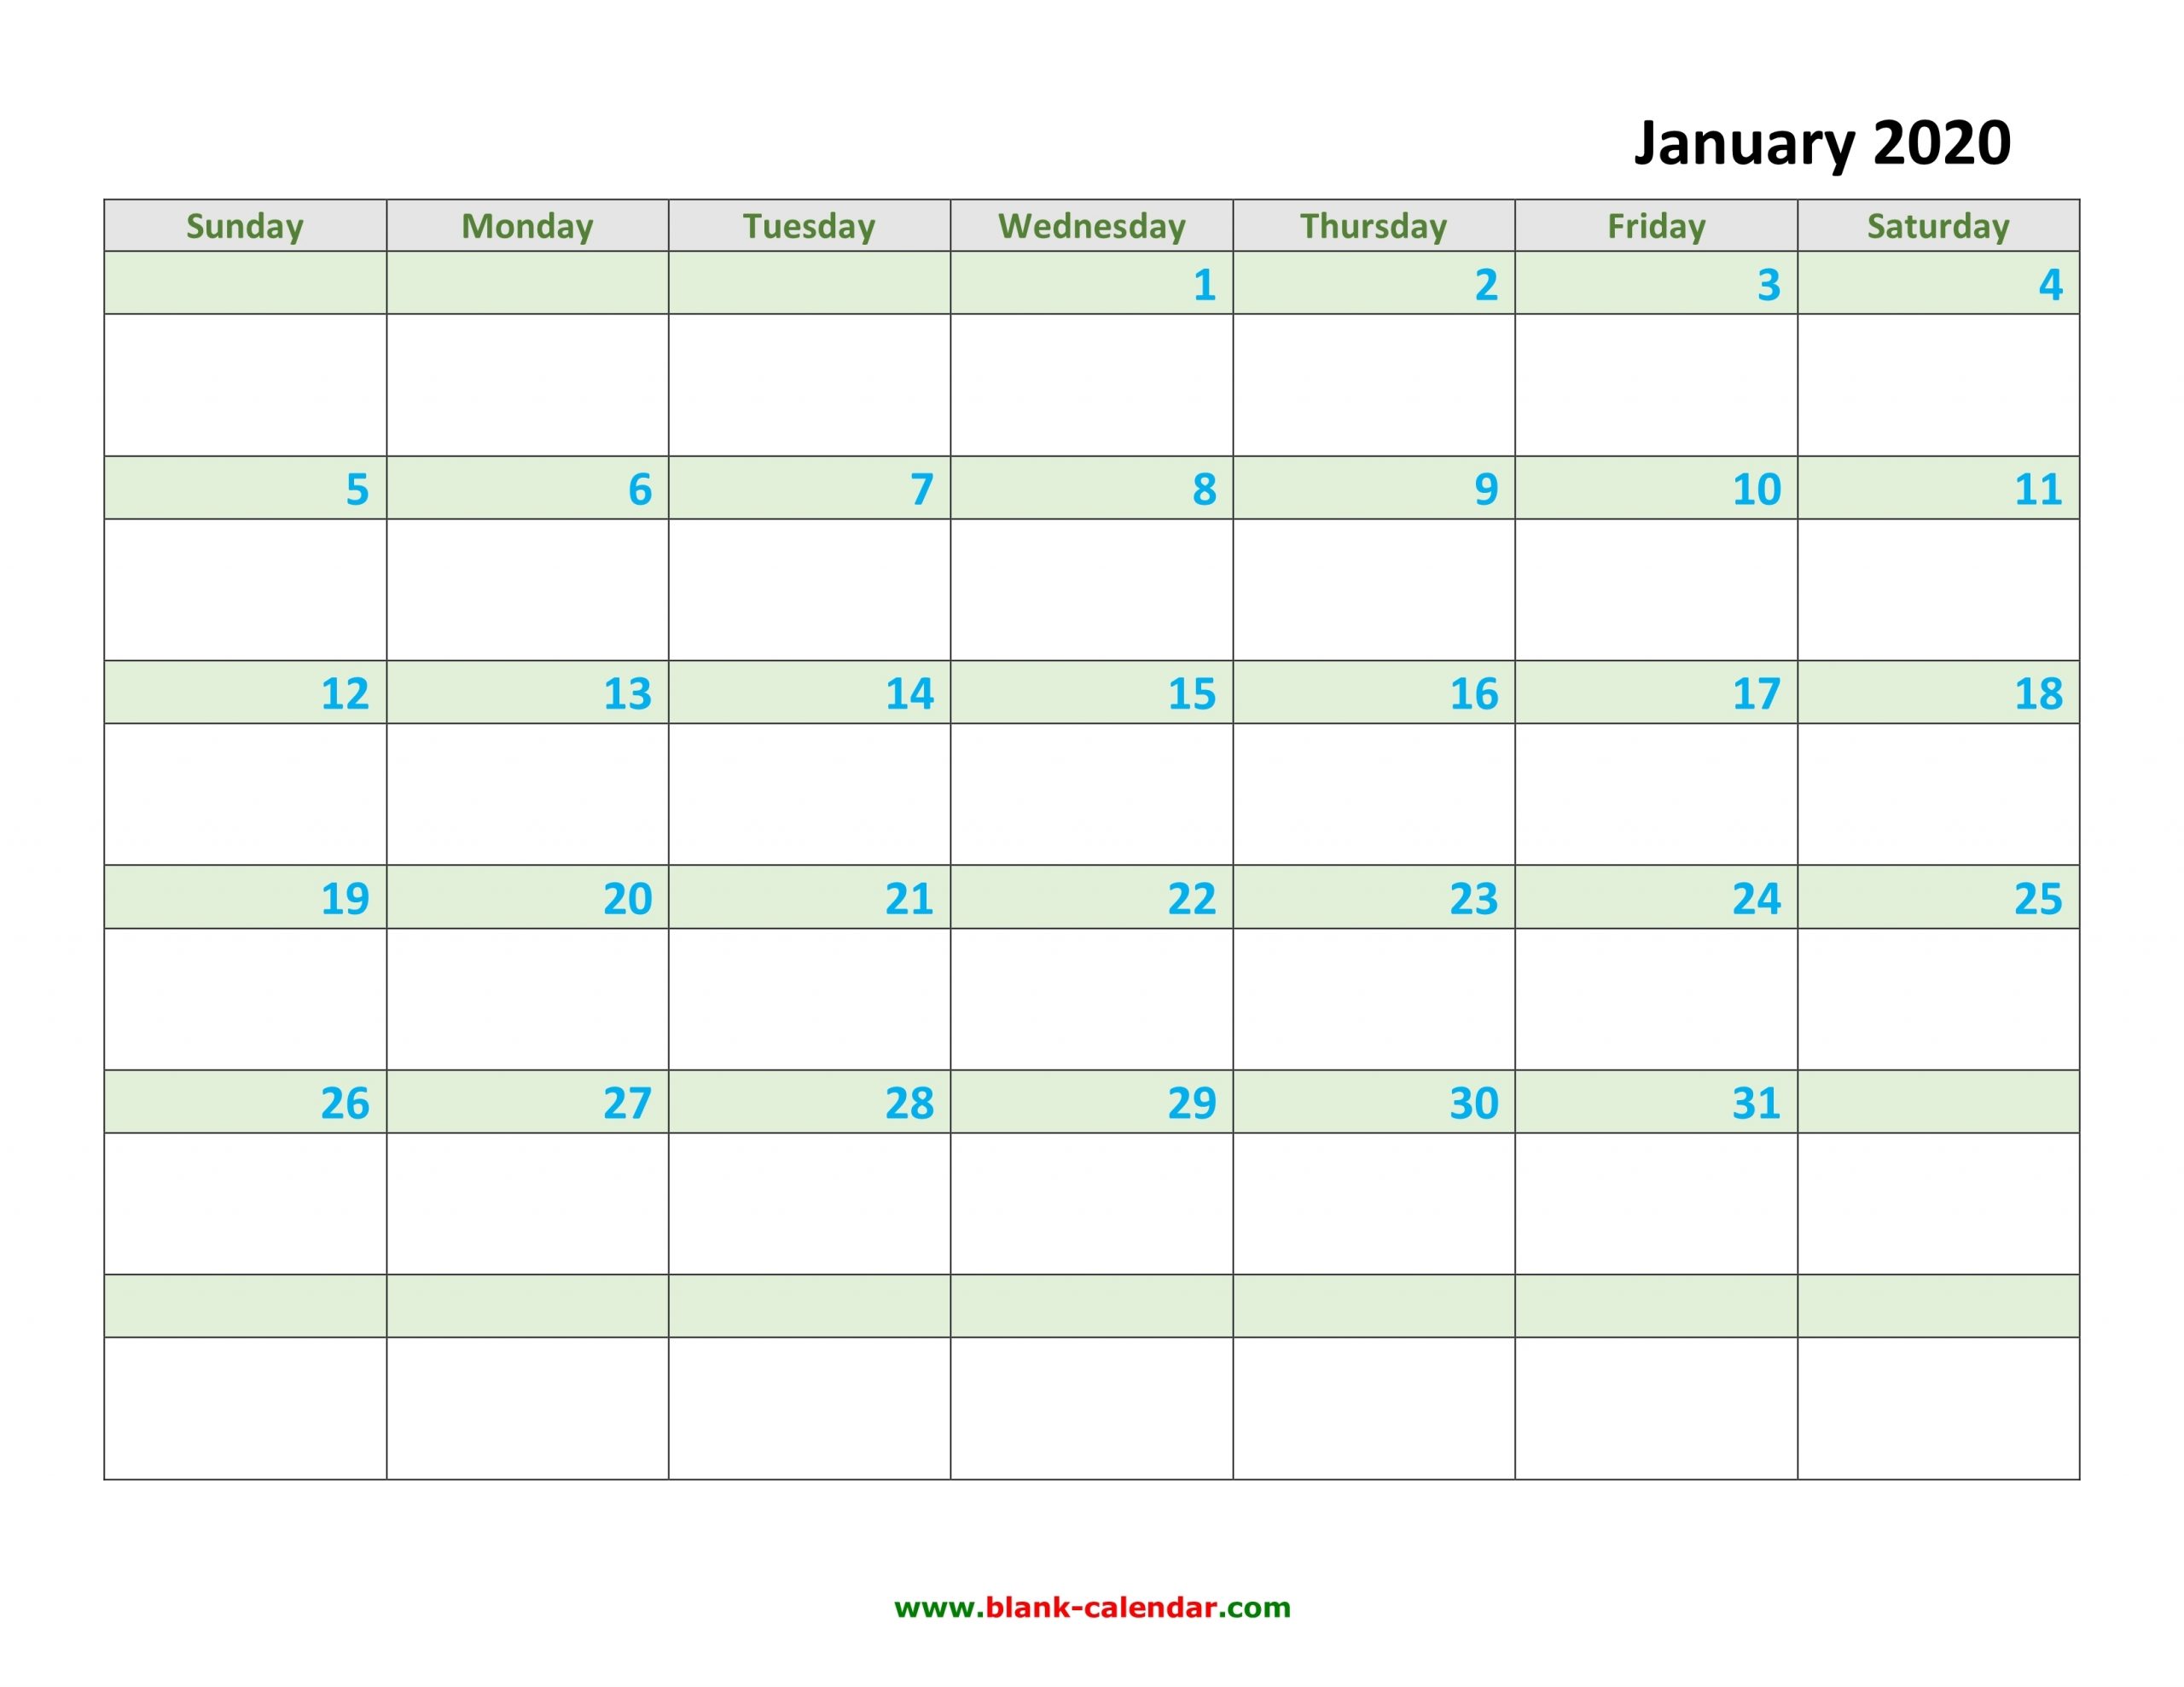 Monthly Calendar 2020 | Free Download, Editable And Printable inside Calendar 2020 Week Wise In Window